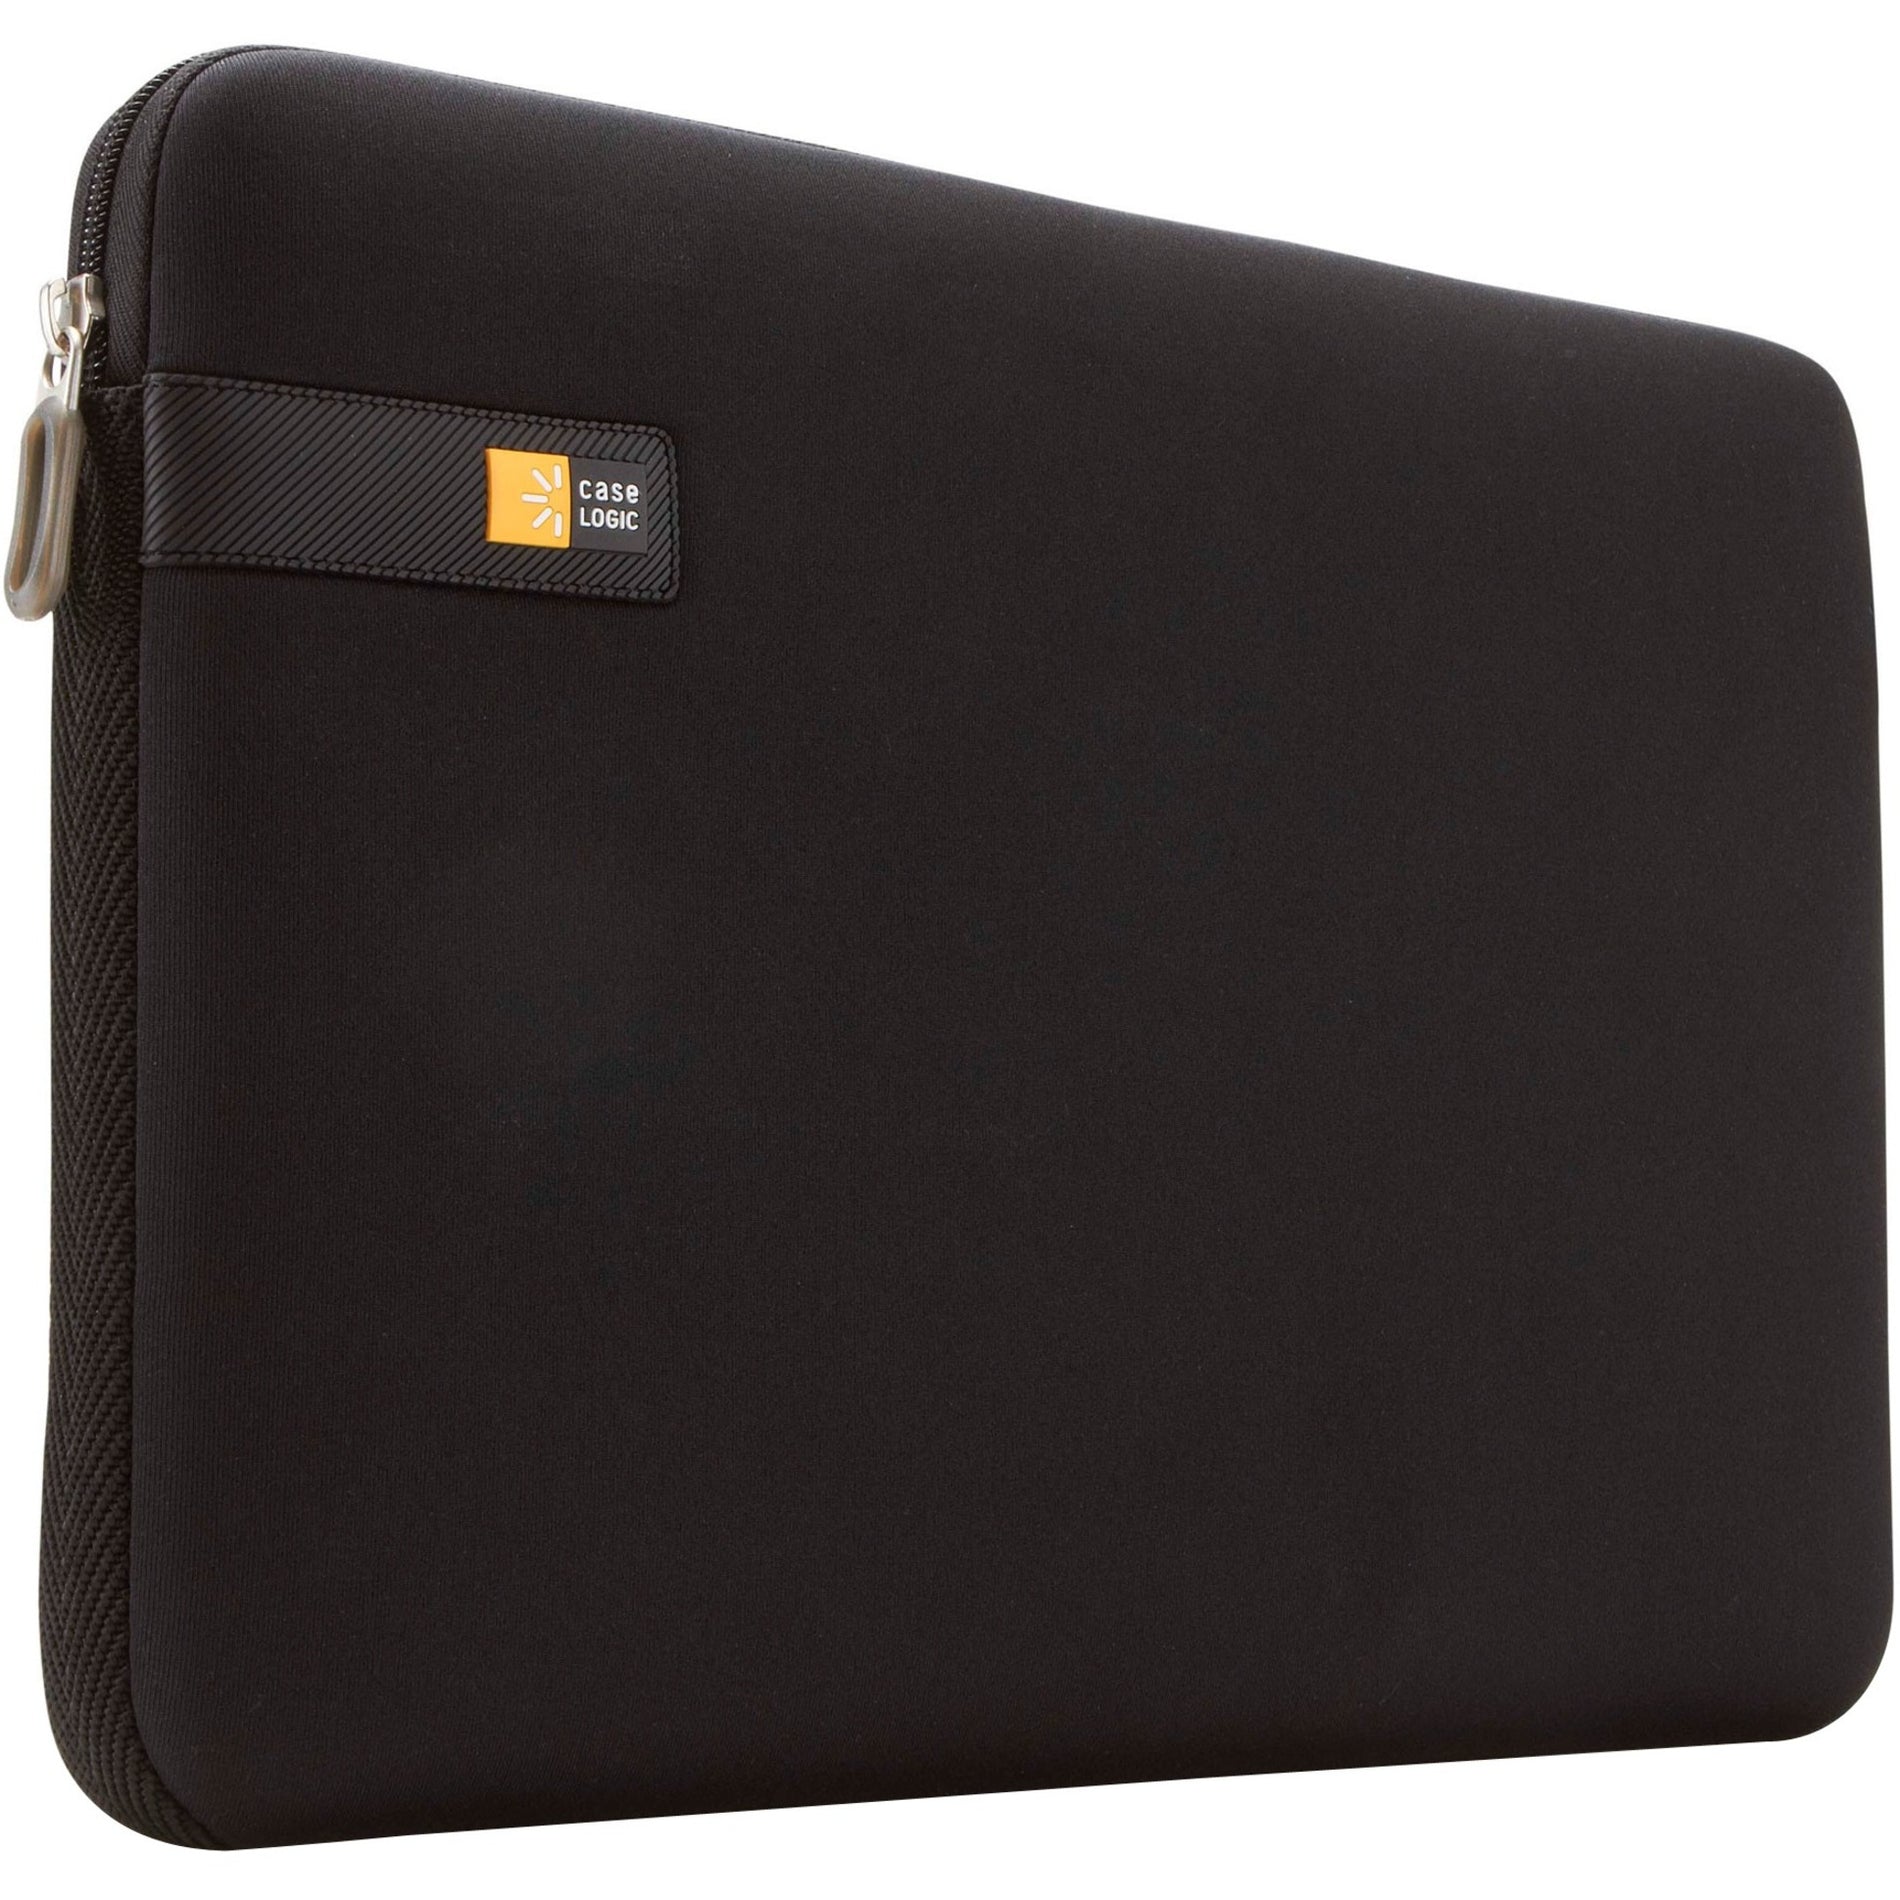 Case Logic 3201354 14" Laptop Sleeve Sleek and Protective Black Carrying Case Discontinued  Case Logic 3201354 14"笔记本电脑袋，时尚保护黑色手提箱 已停产